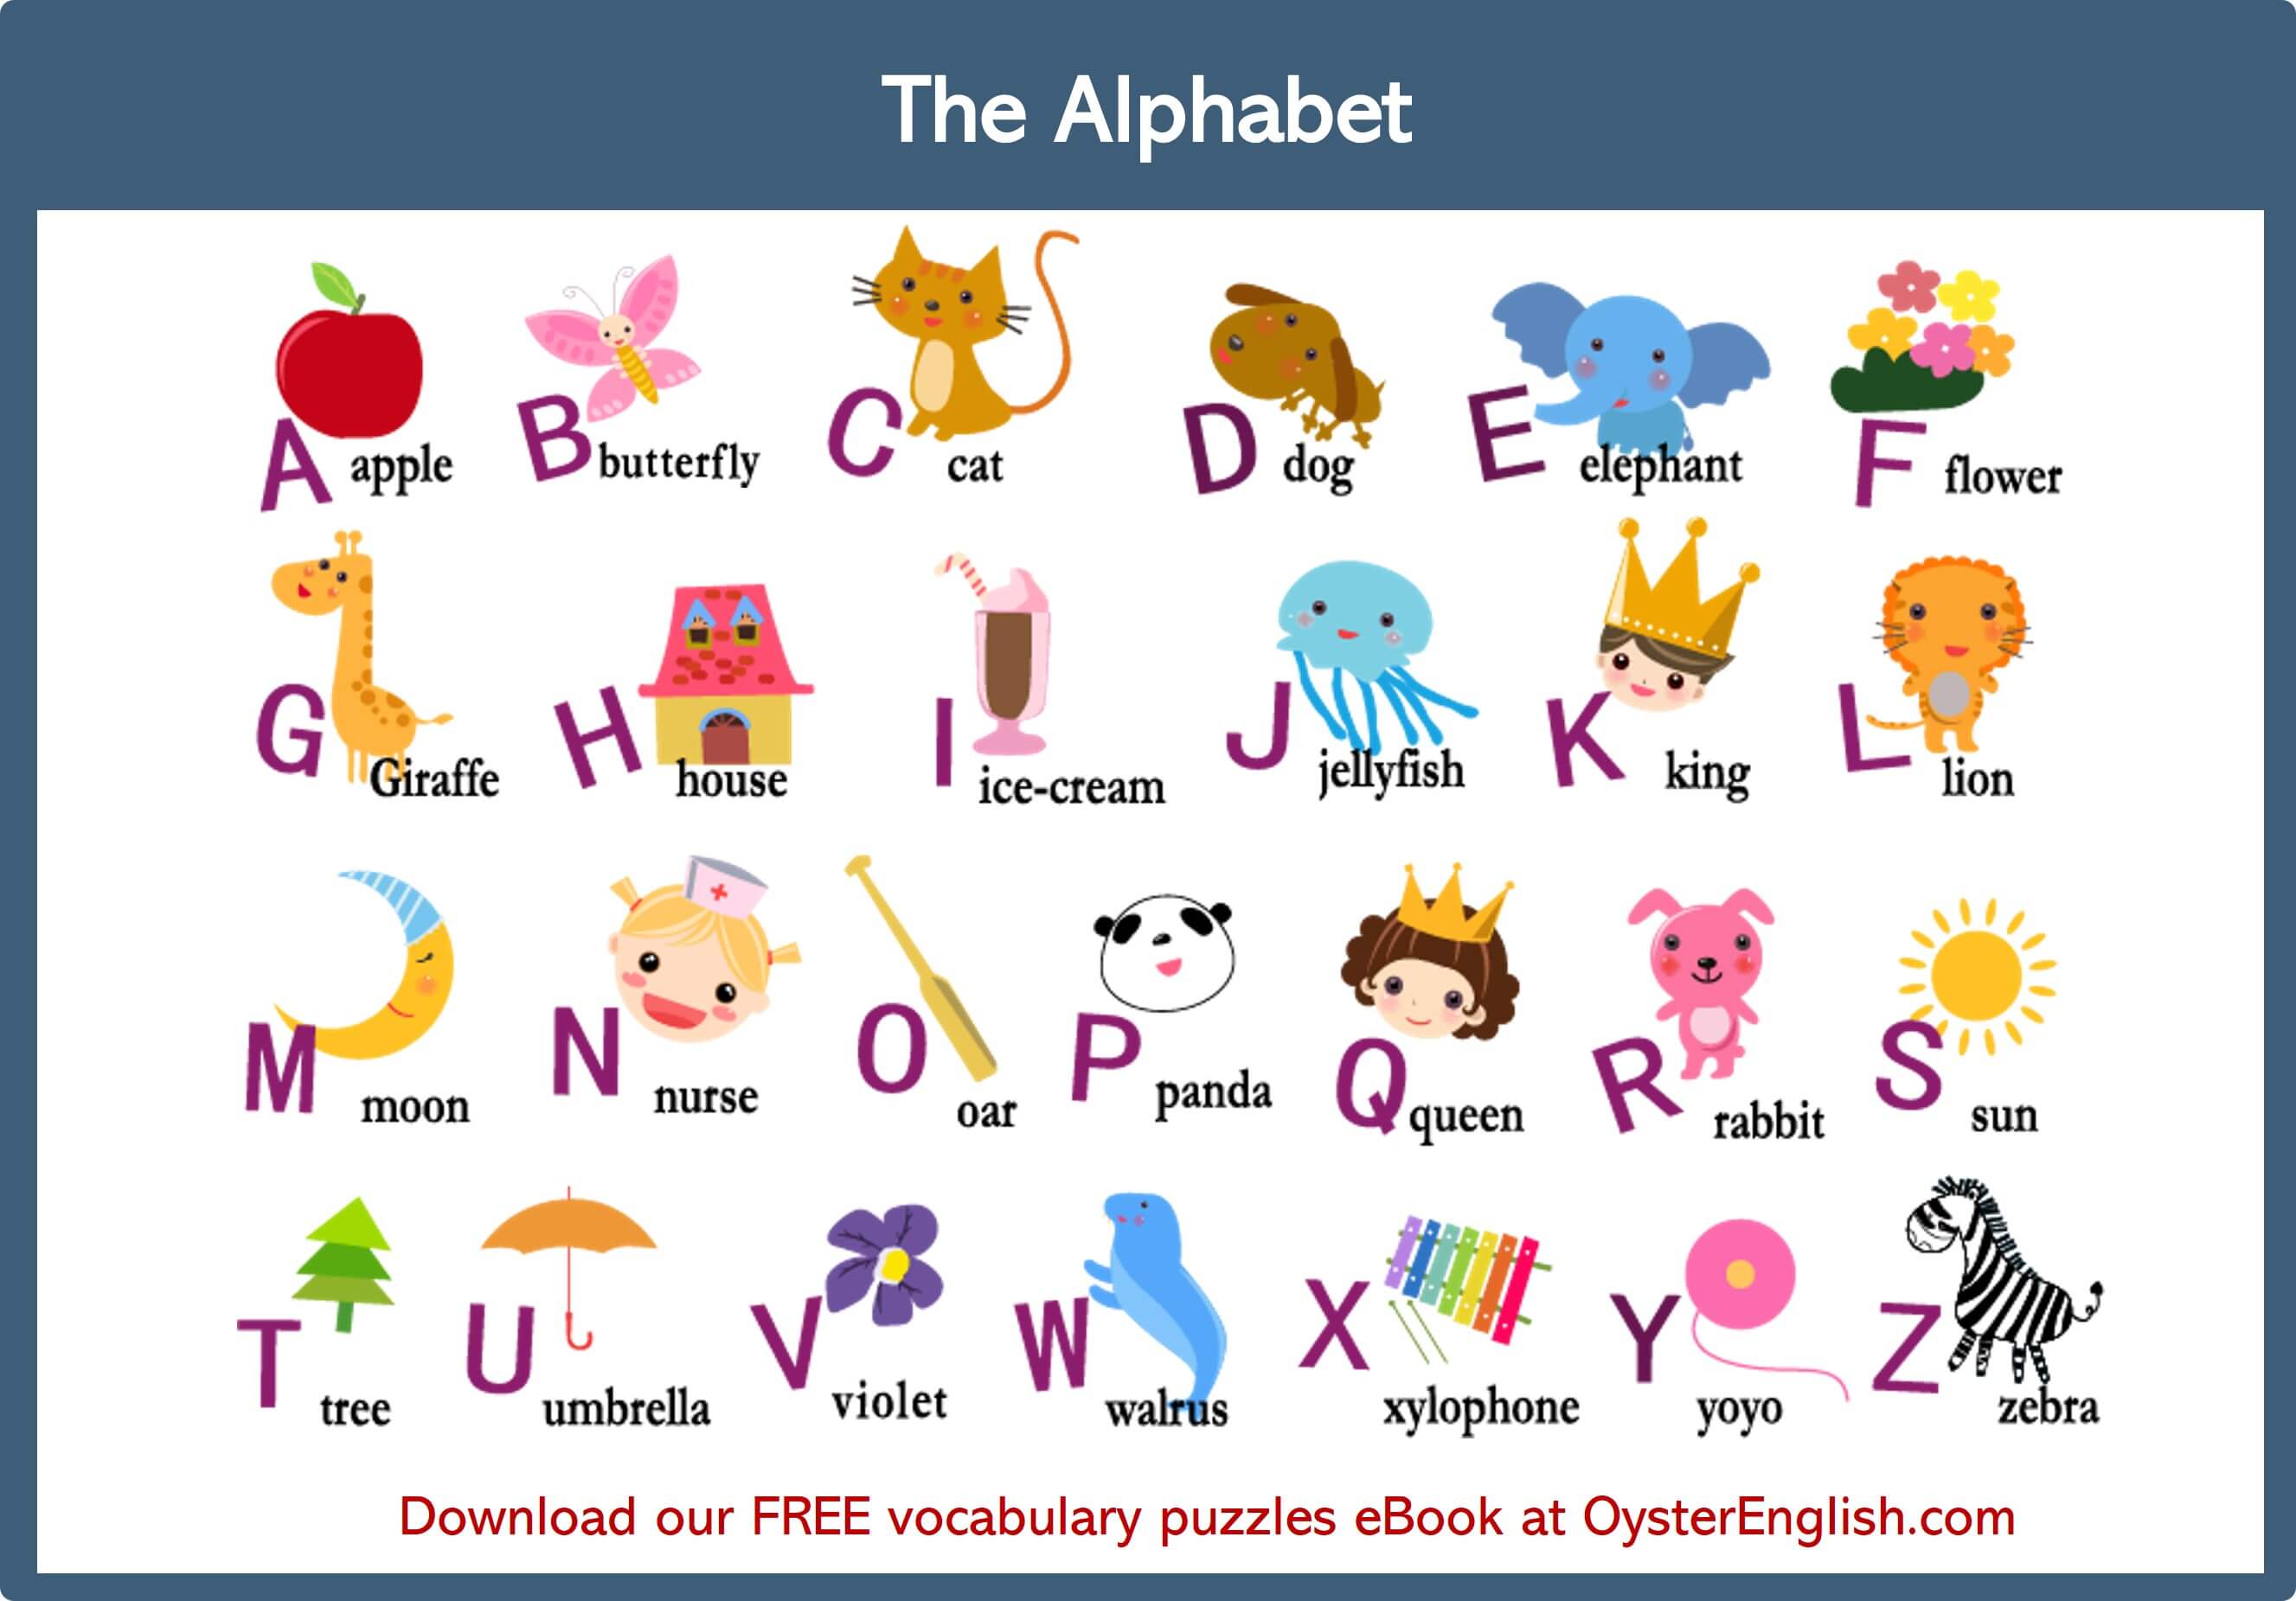 english-alphabet